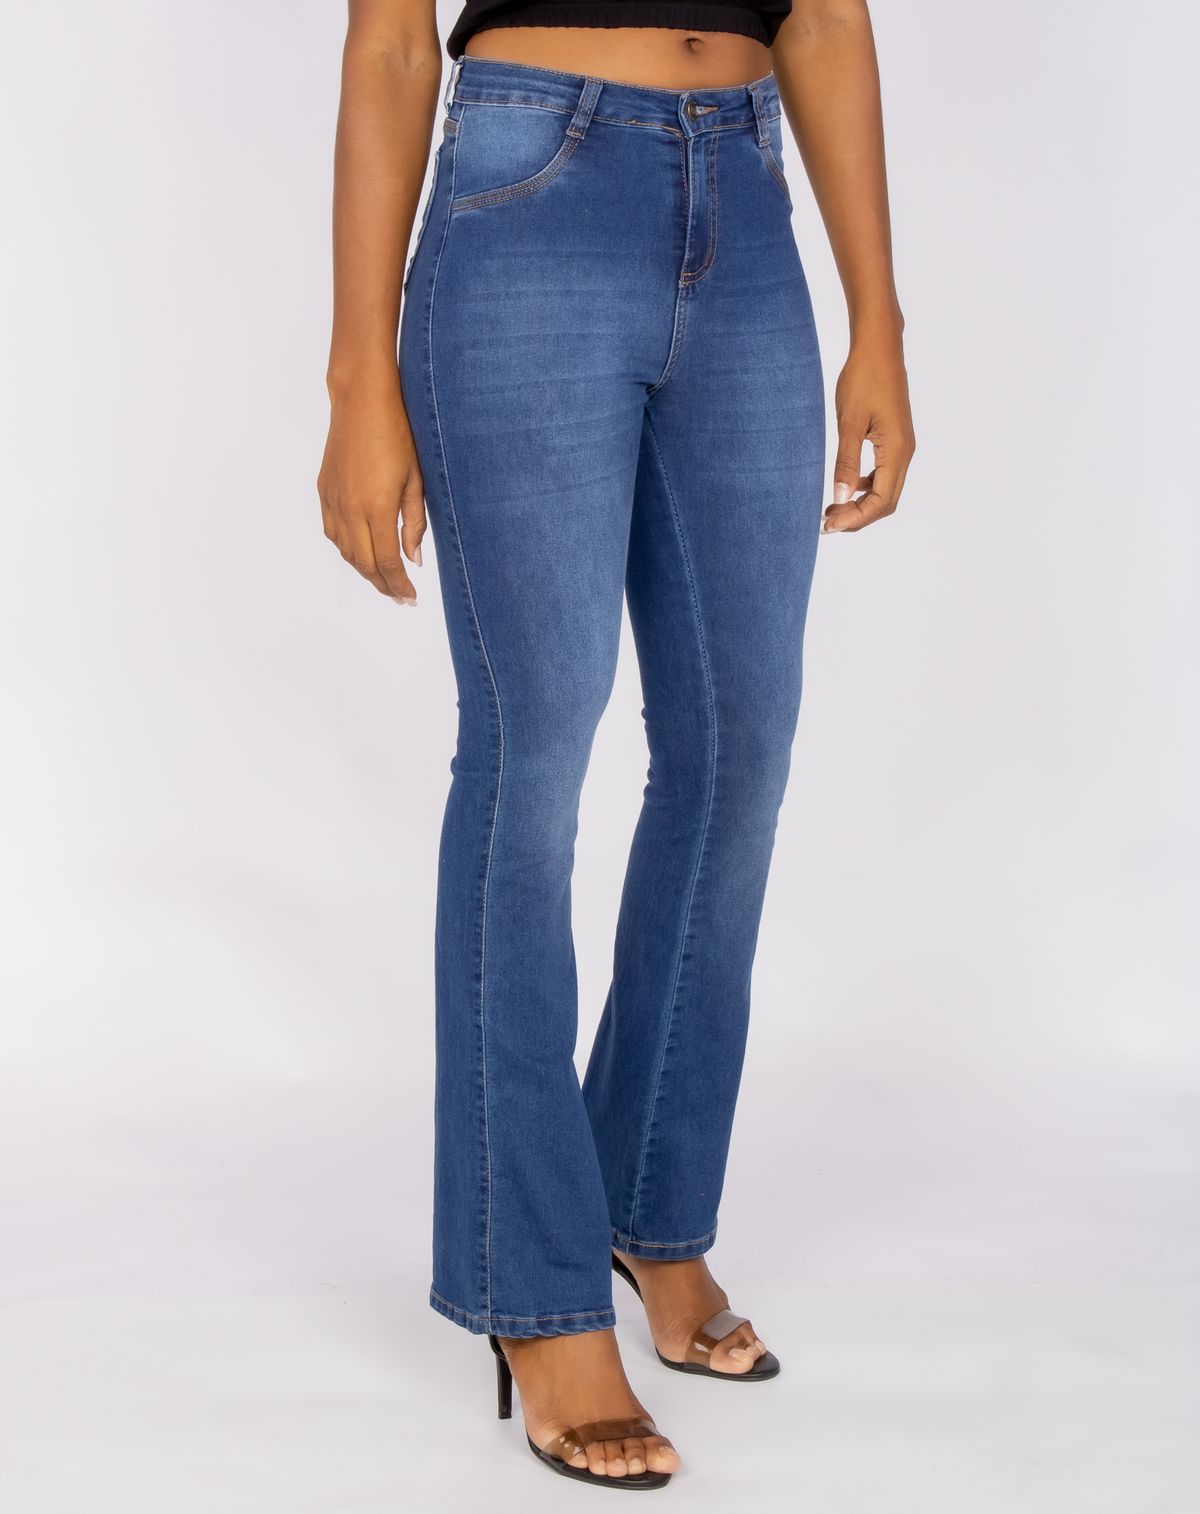 594696001-calca-jeans-flare-feminina-jeans-medio-36-cad